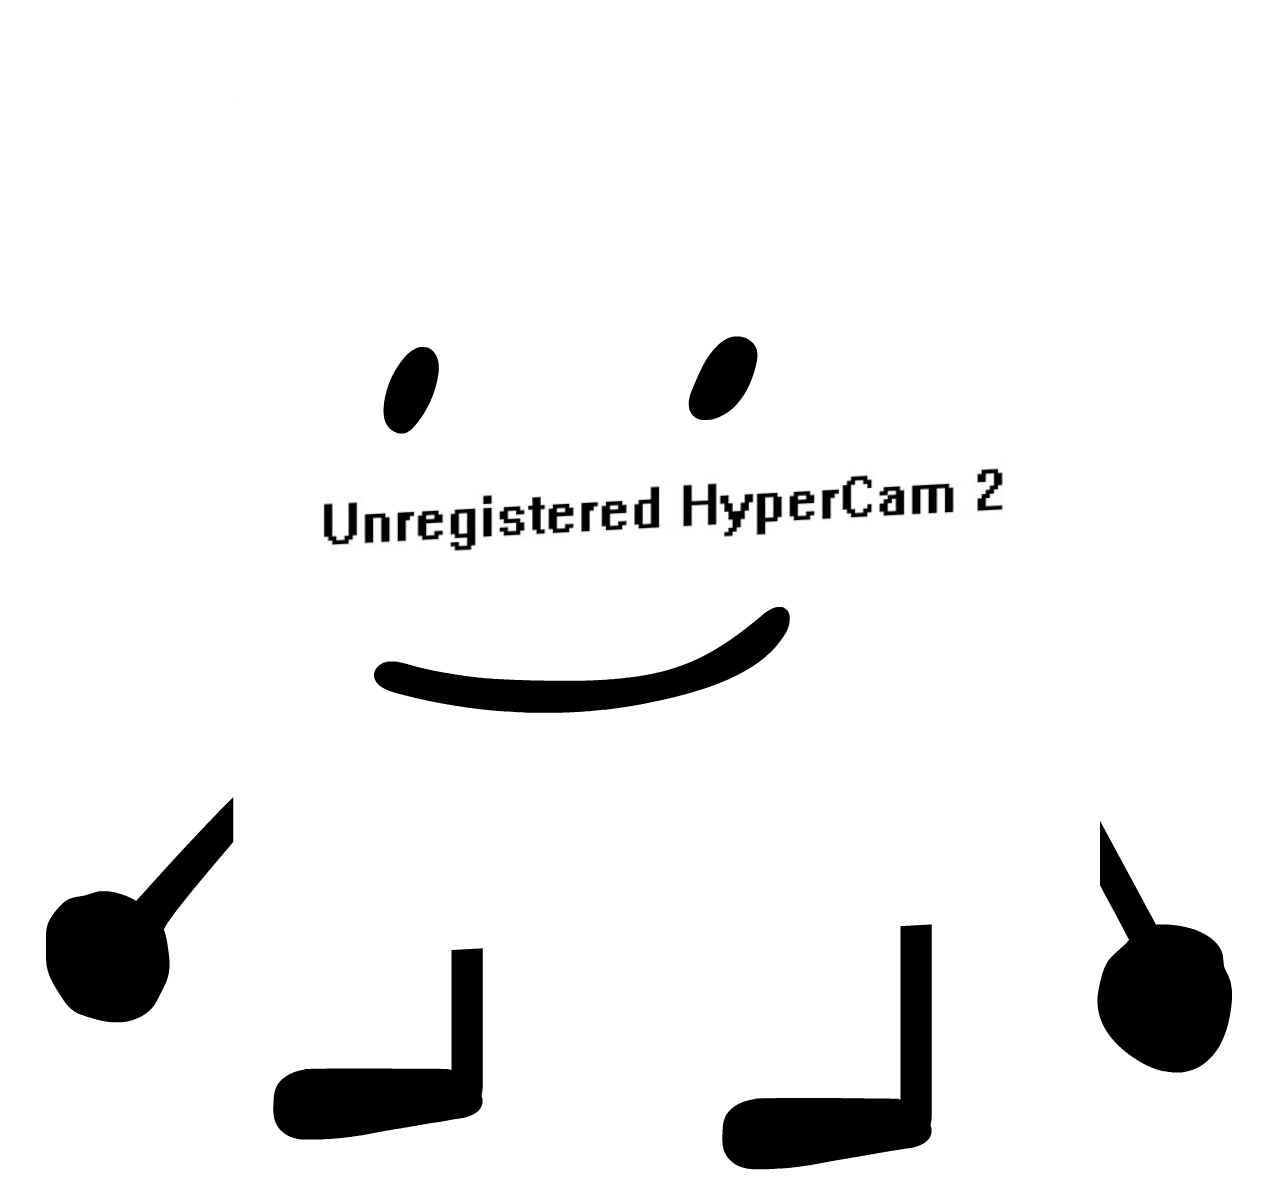 hypercam 2 download unregistered